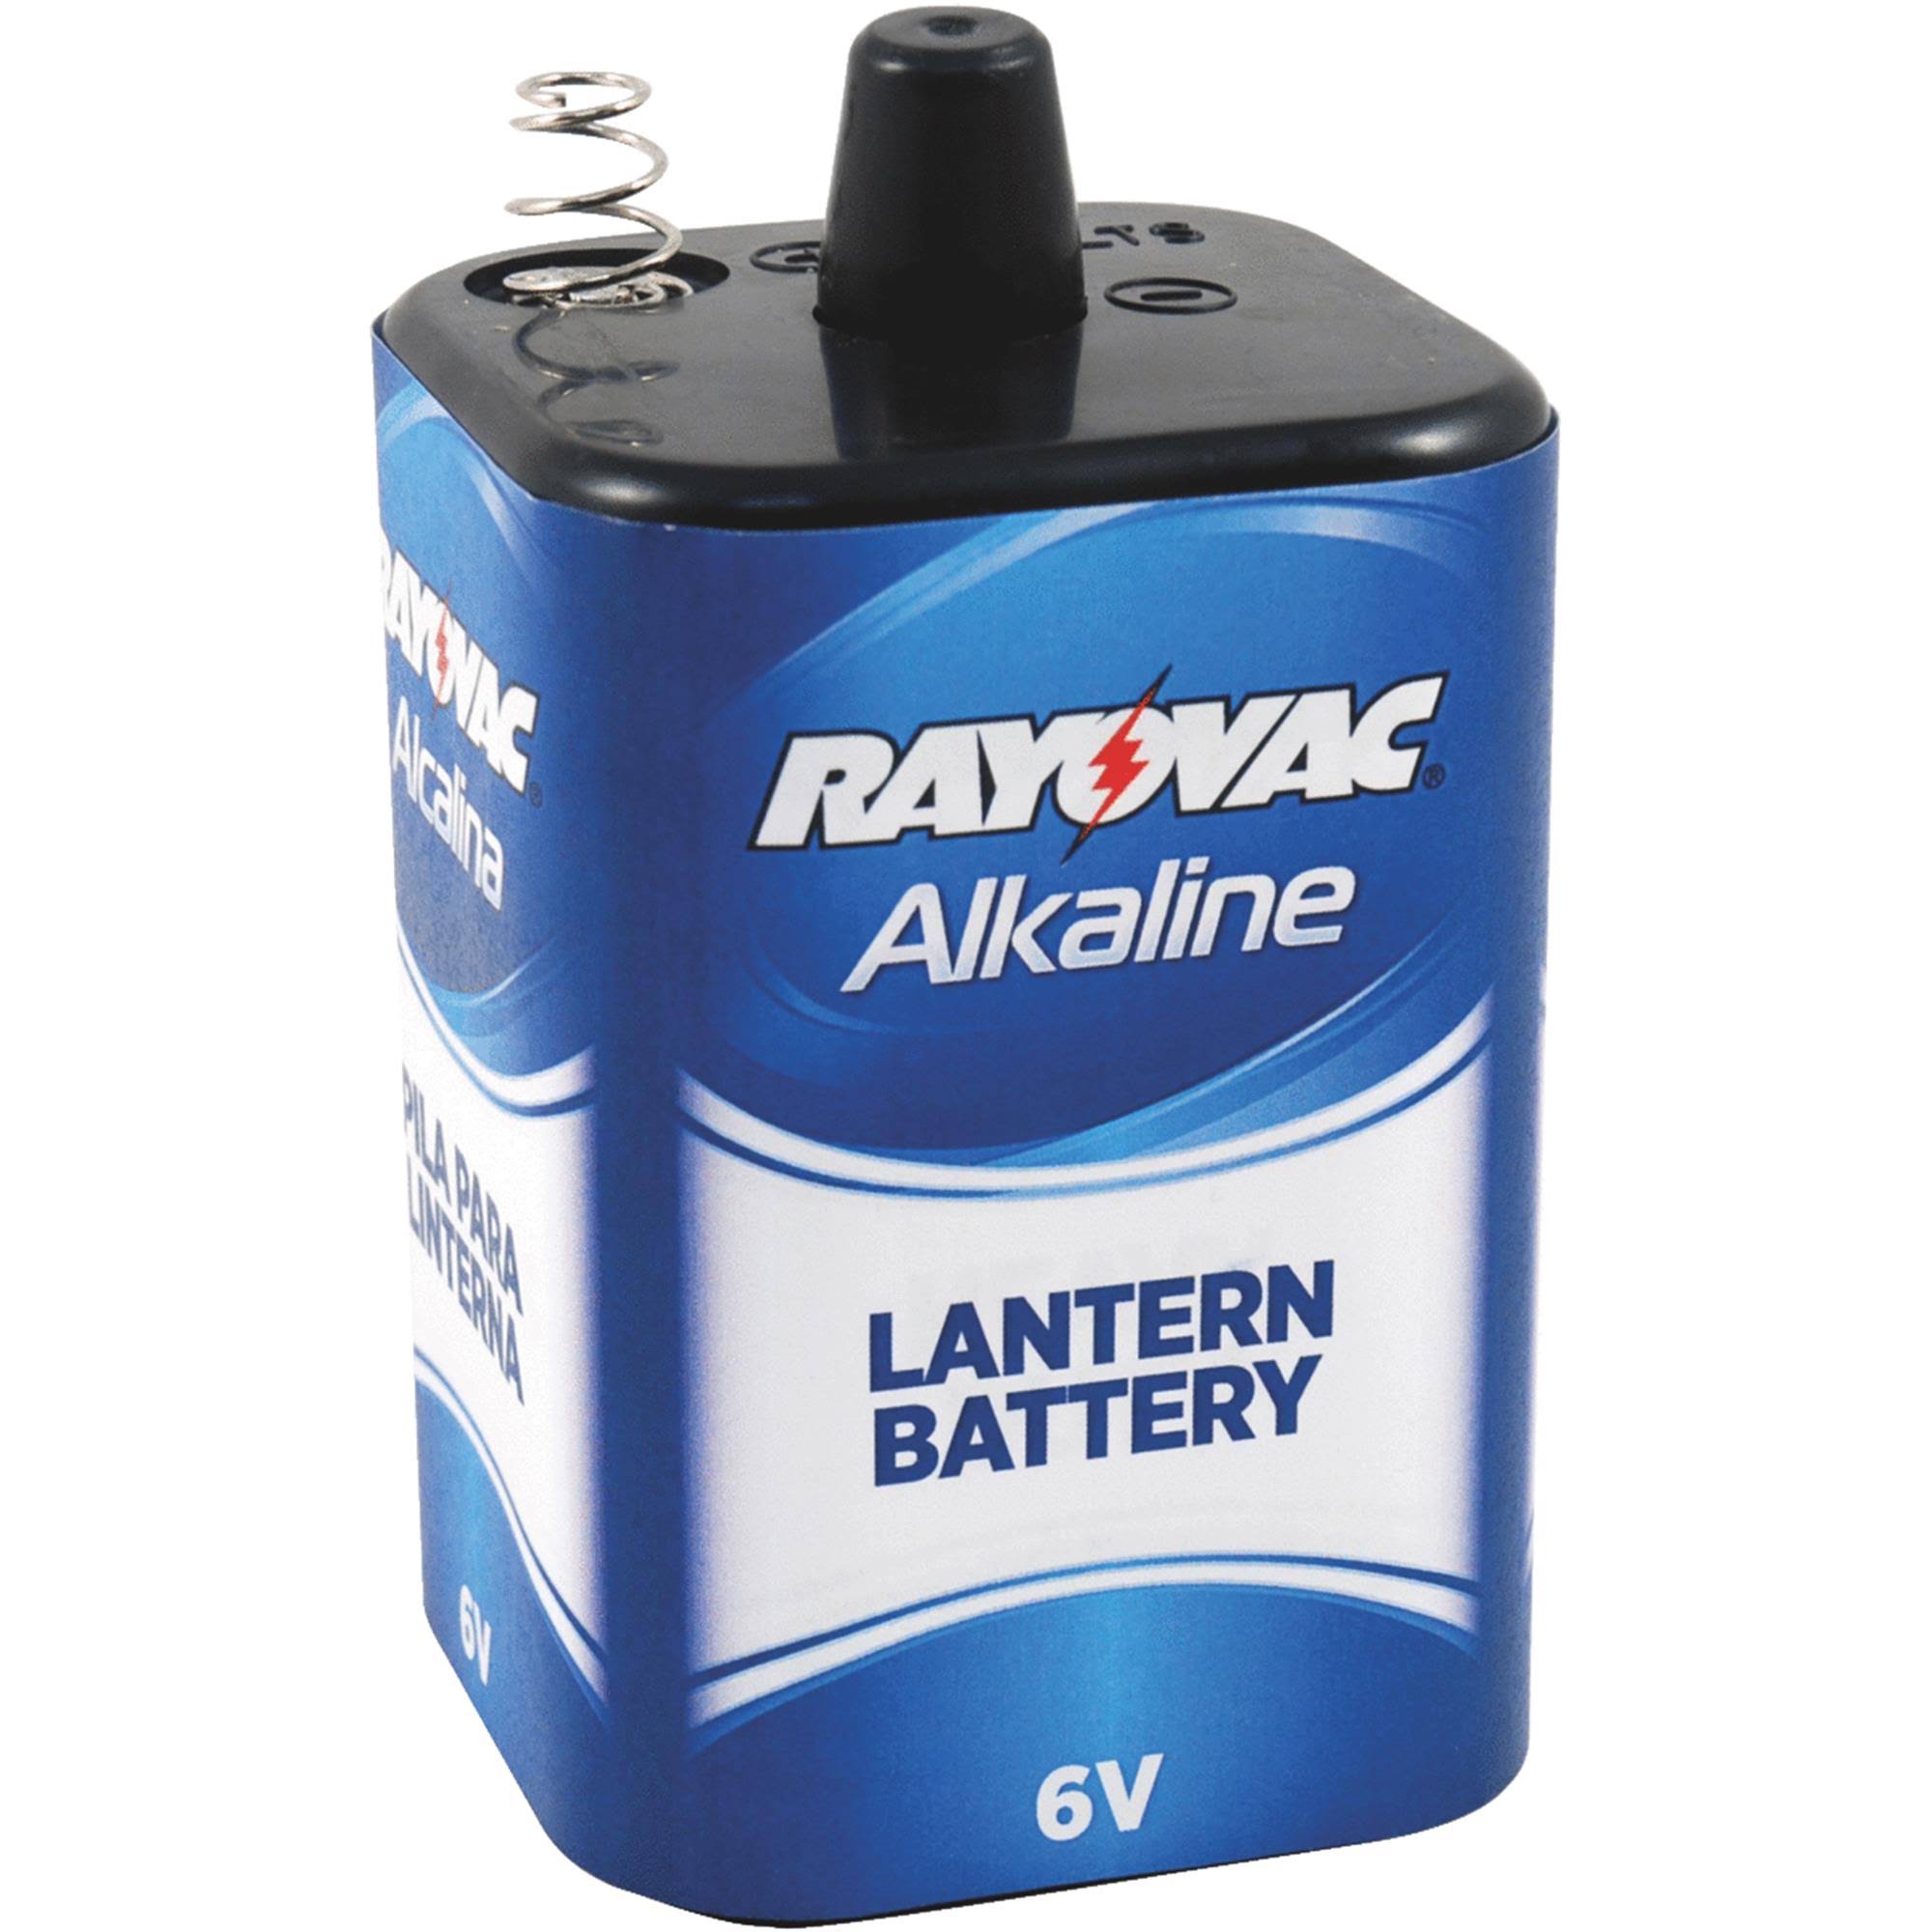 Rayovac Alkaline 6 Volt Lantern Battery